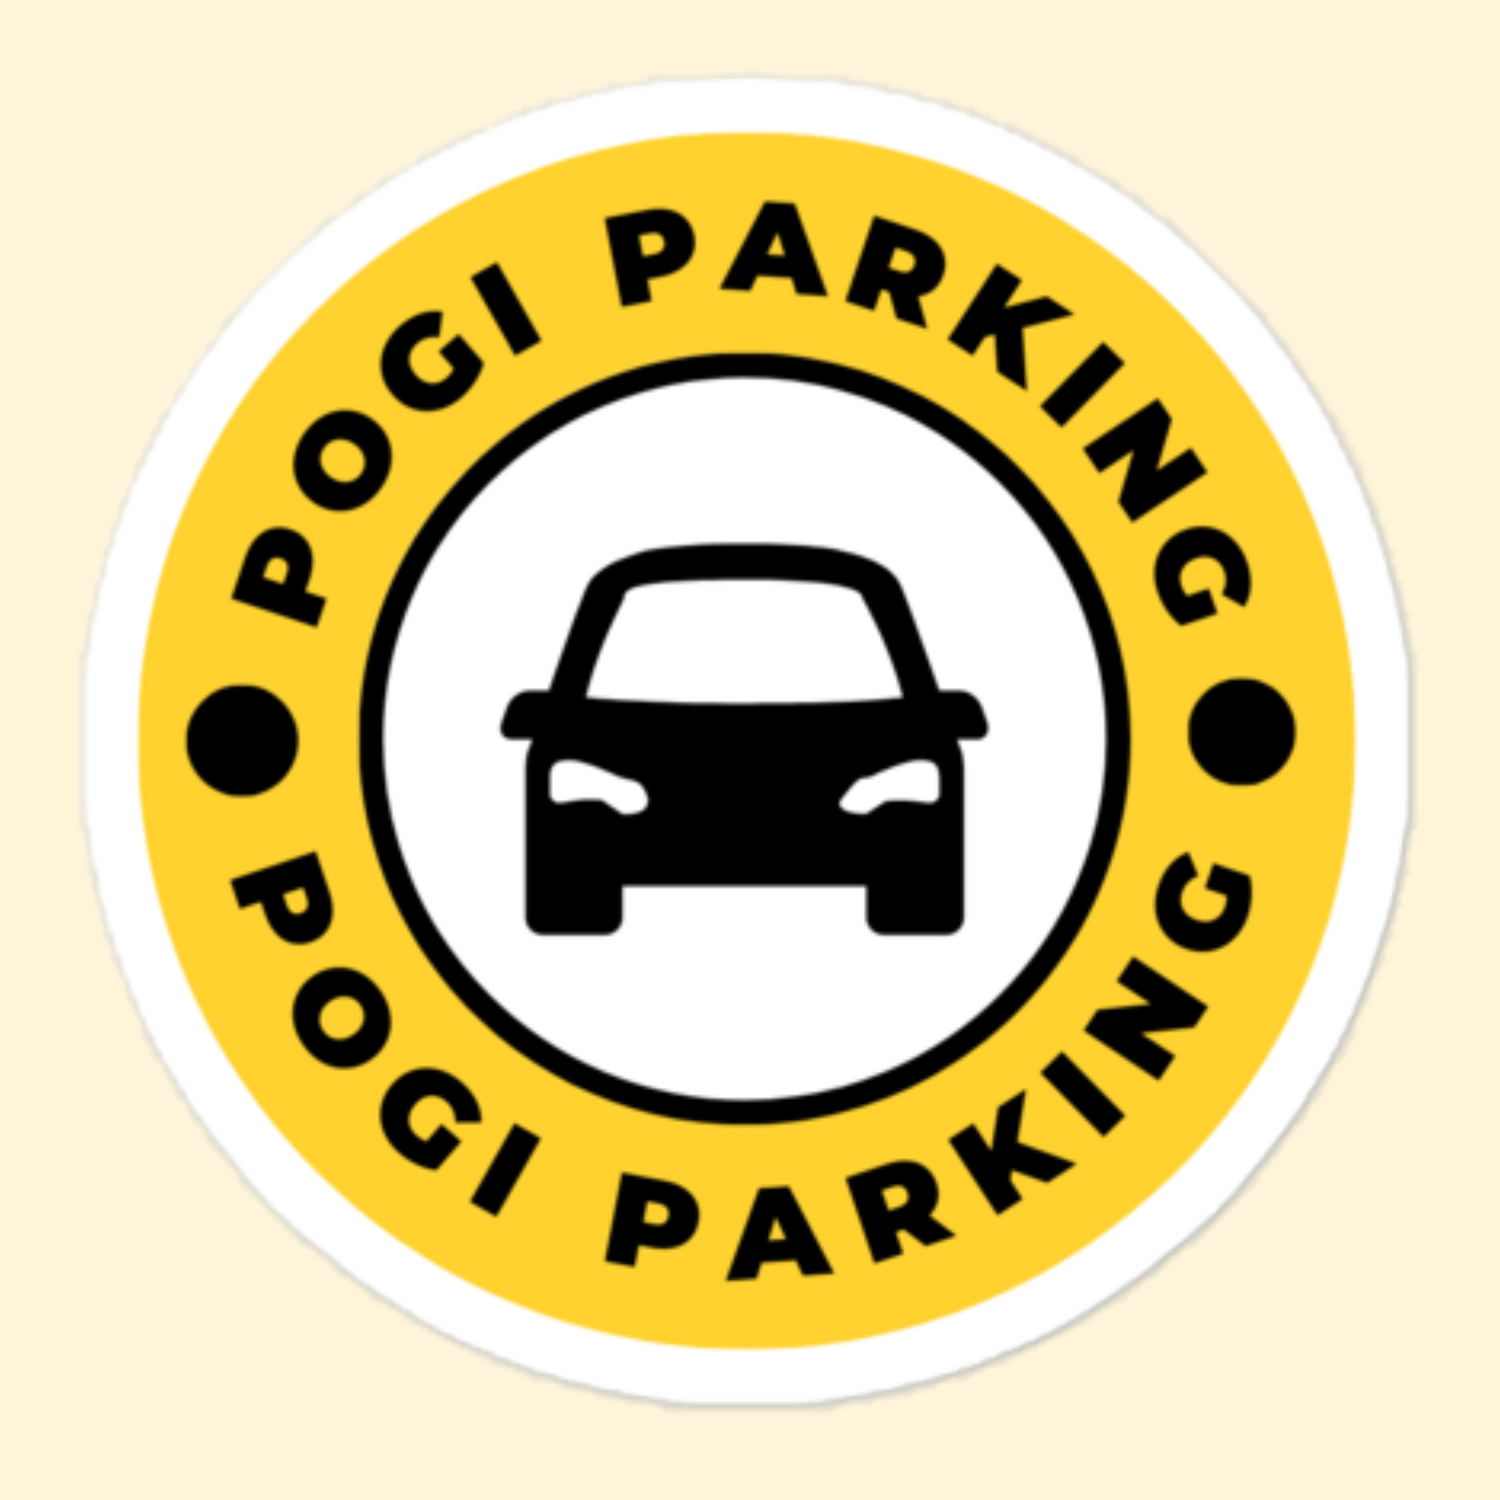 Bawal Ang Pangit Tanga Fragile Sa Pagibig Tagalog Pinoy Decals variant Pogi Parking Decal